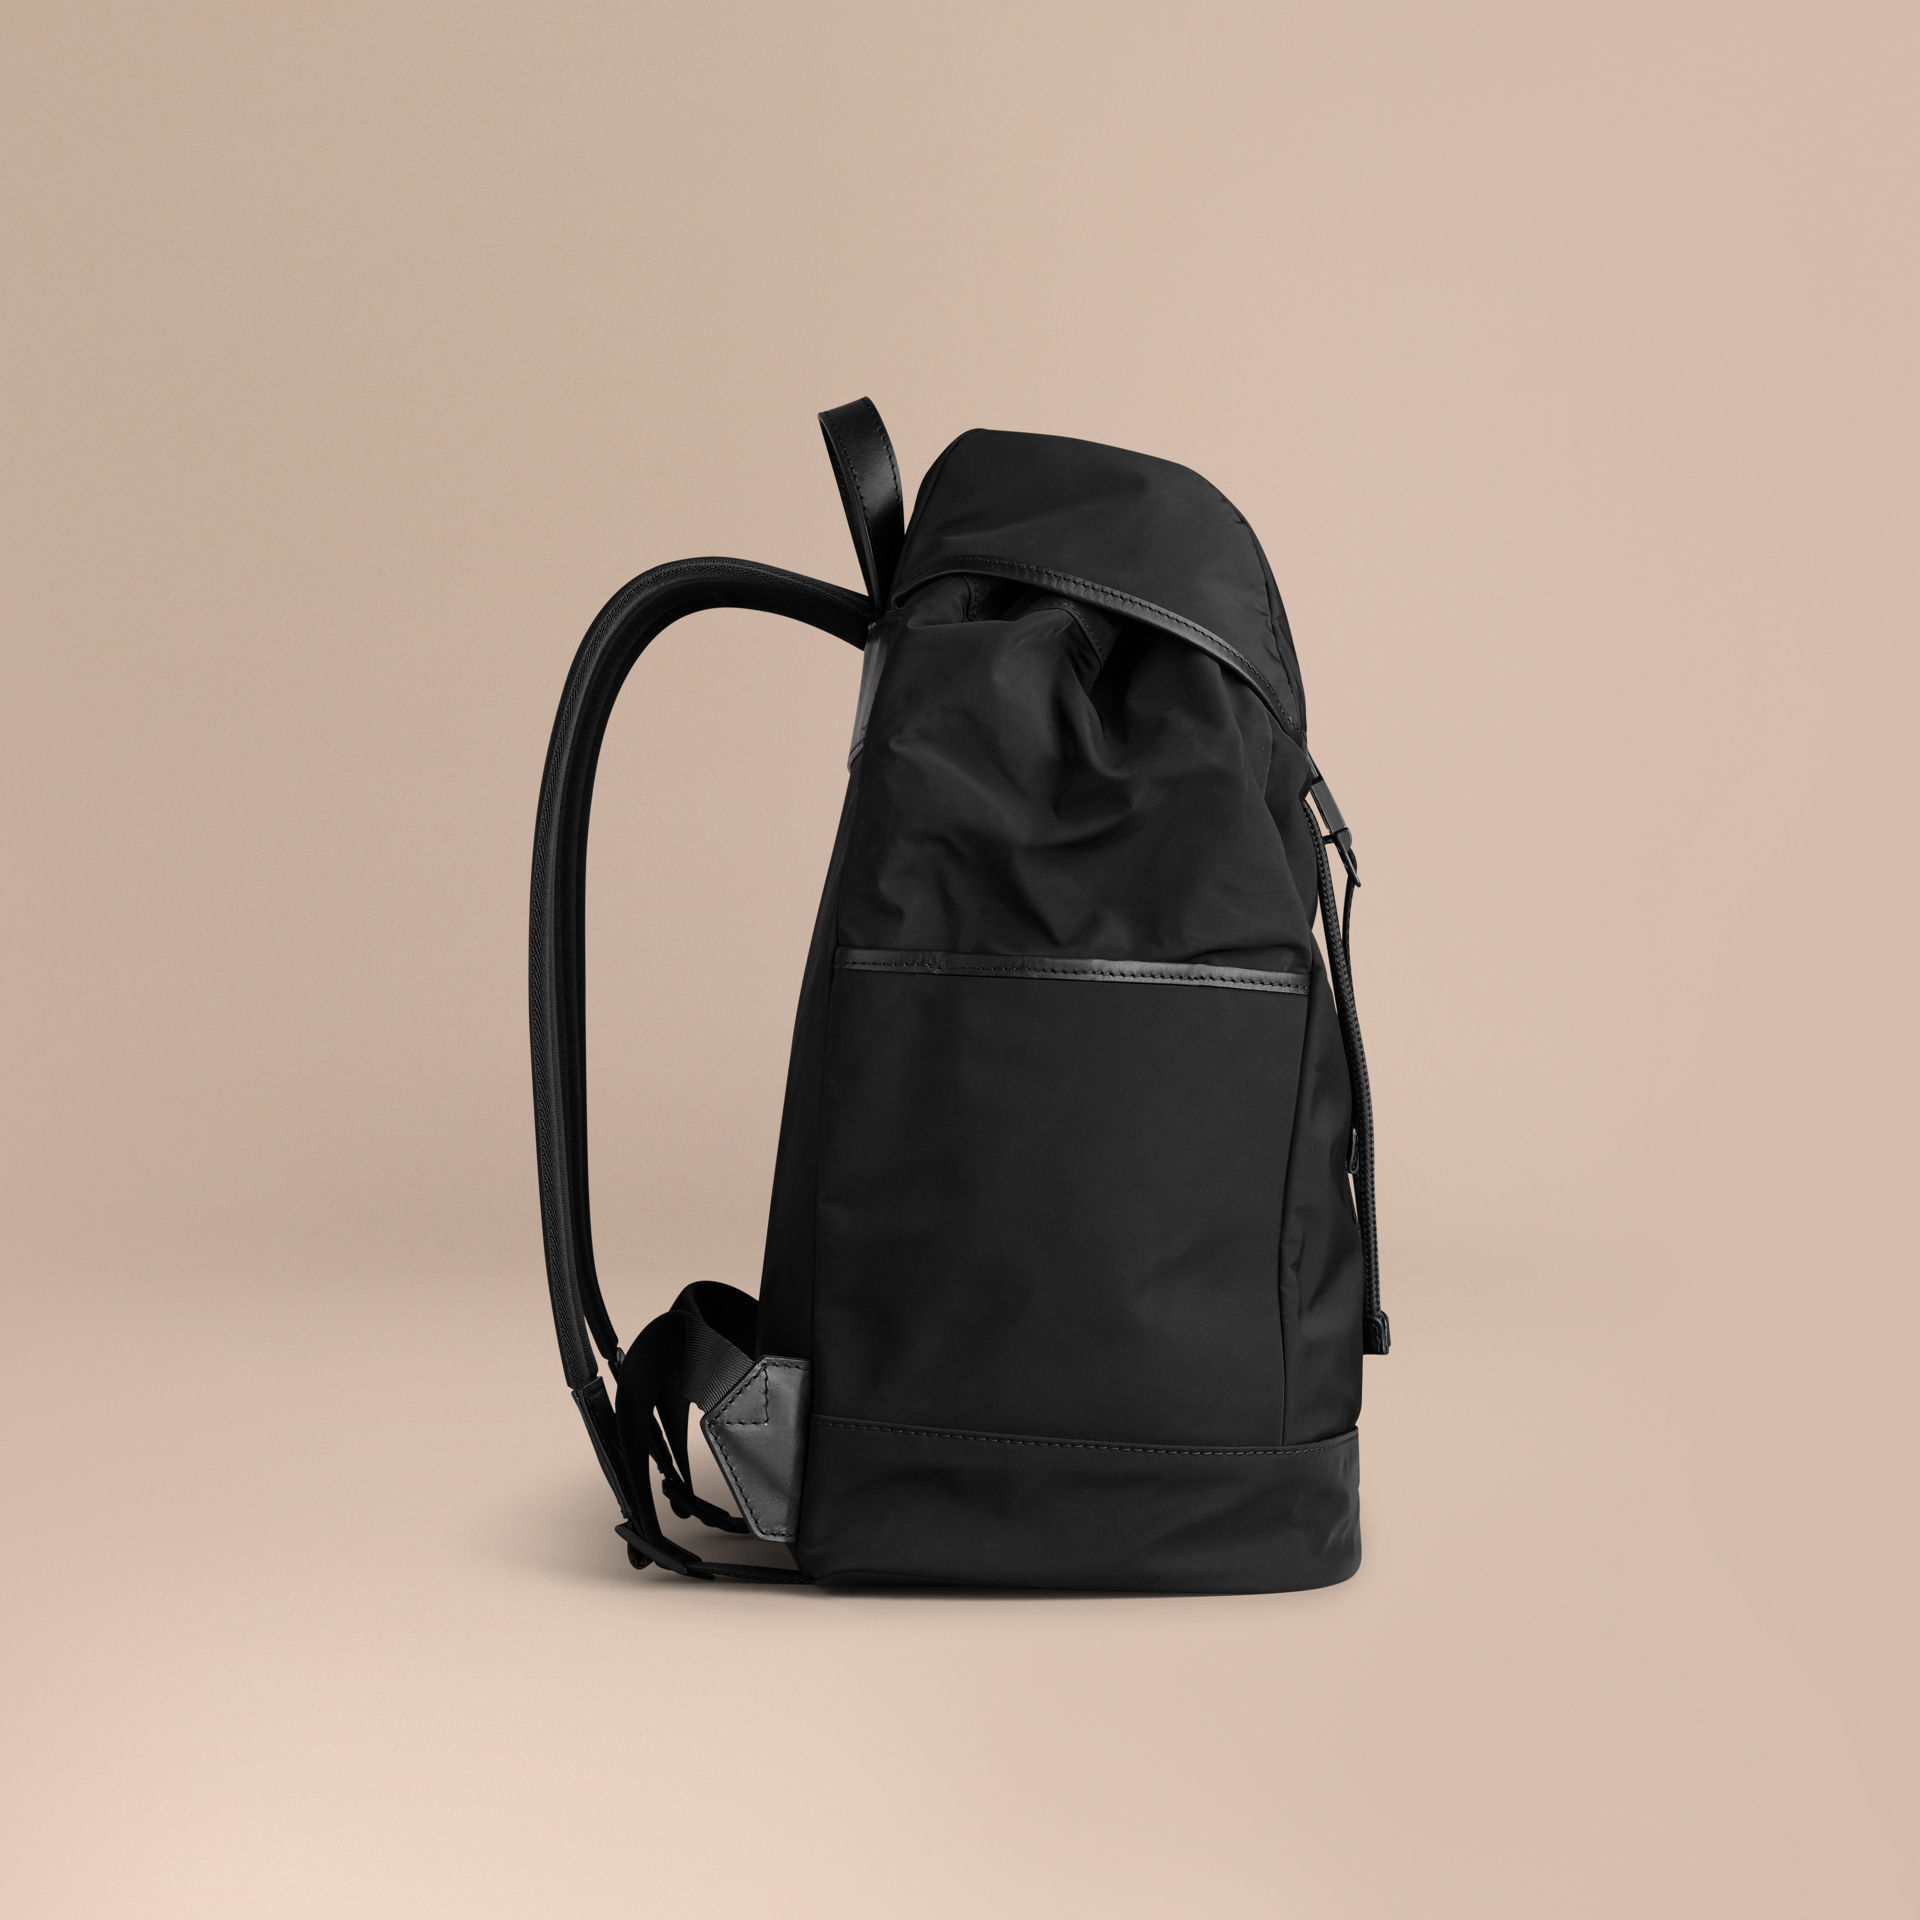 Burberry Leather Trim Lightweight Backpack Black in Black for Men - Lyst